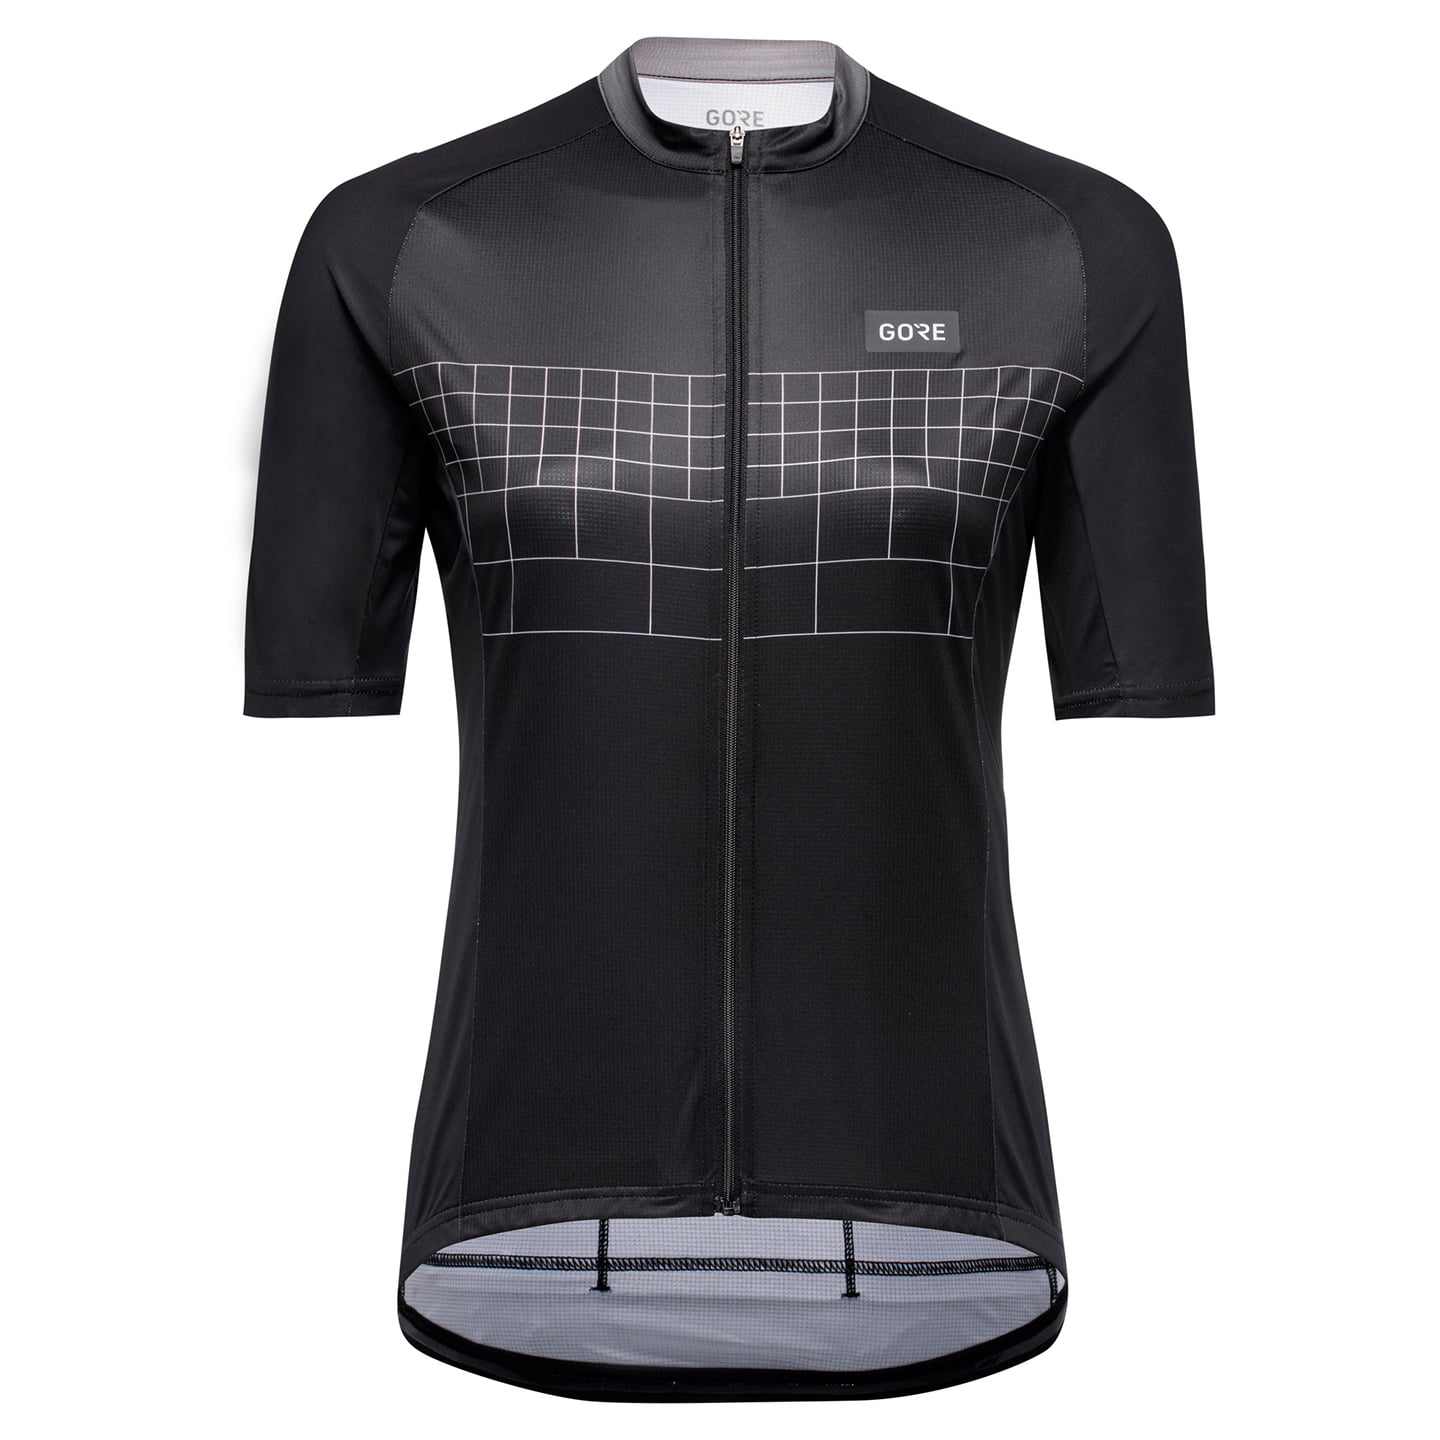 GORE WEAR Grid Fade 2.0 Women’s Jersey Women’s Short Sleeve Jersey, size 36, Bike Jersey, Cycling clothes